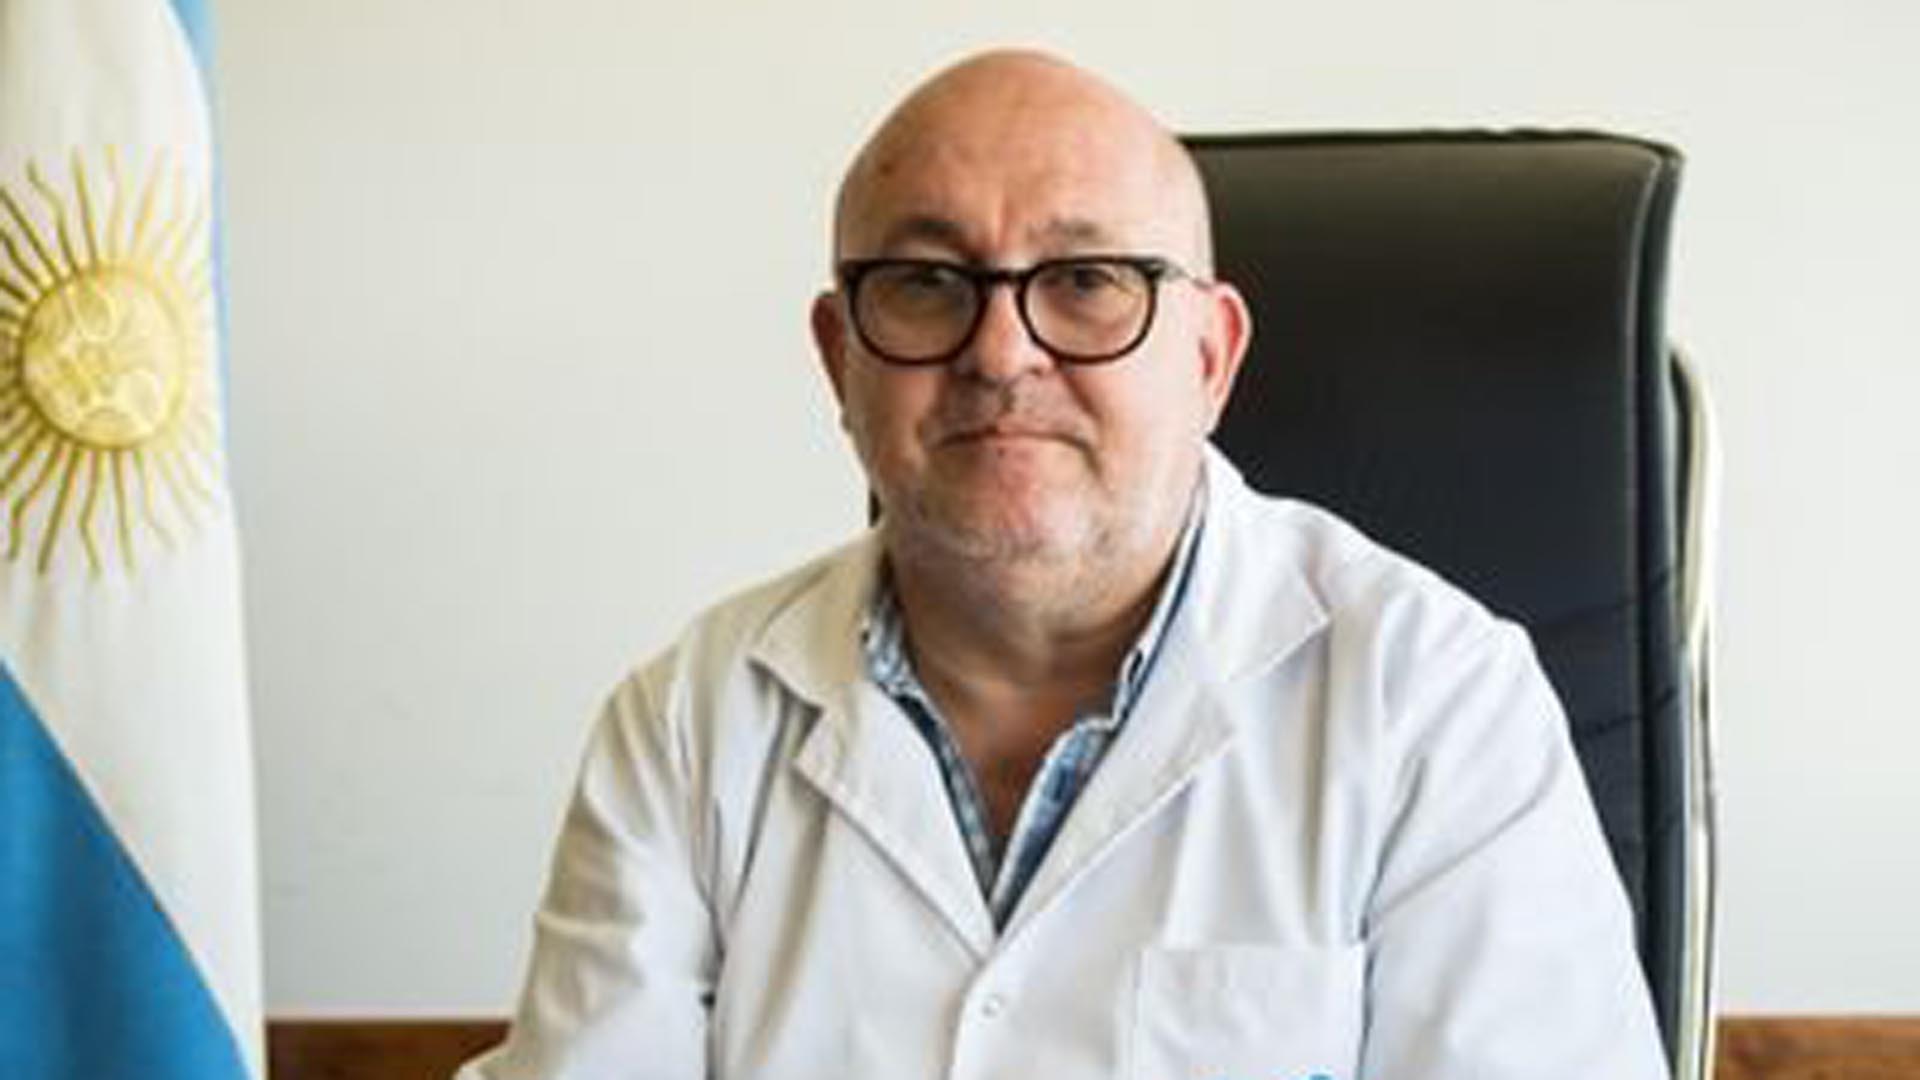 Alberto Maceira, director del Hospital Posadas